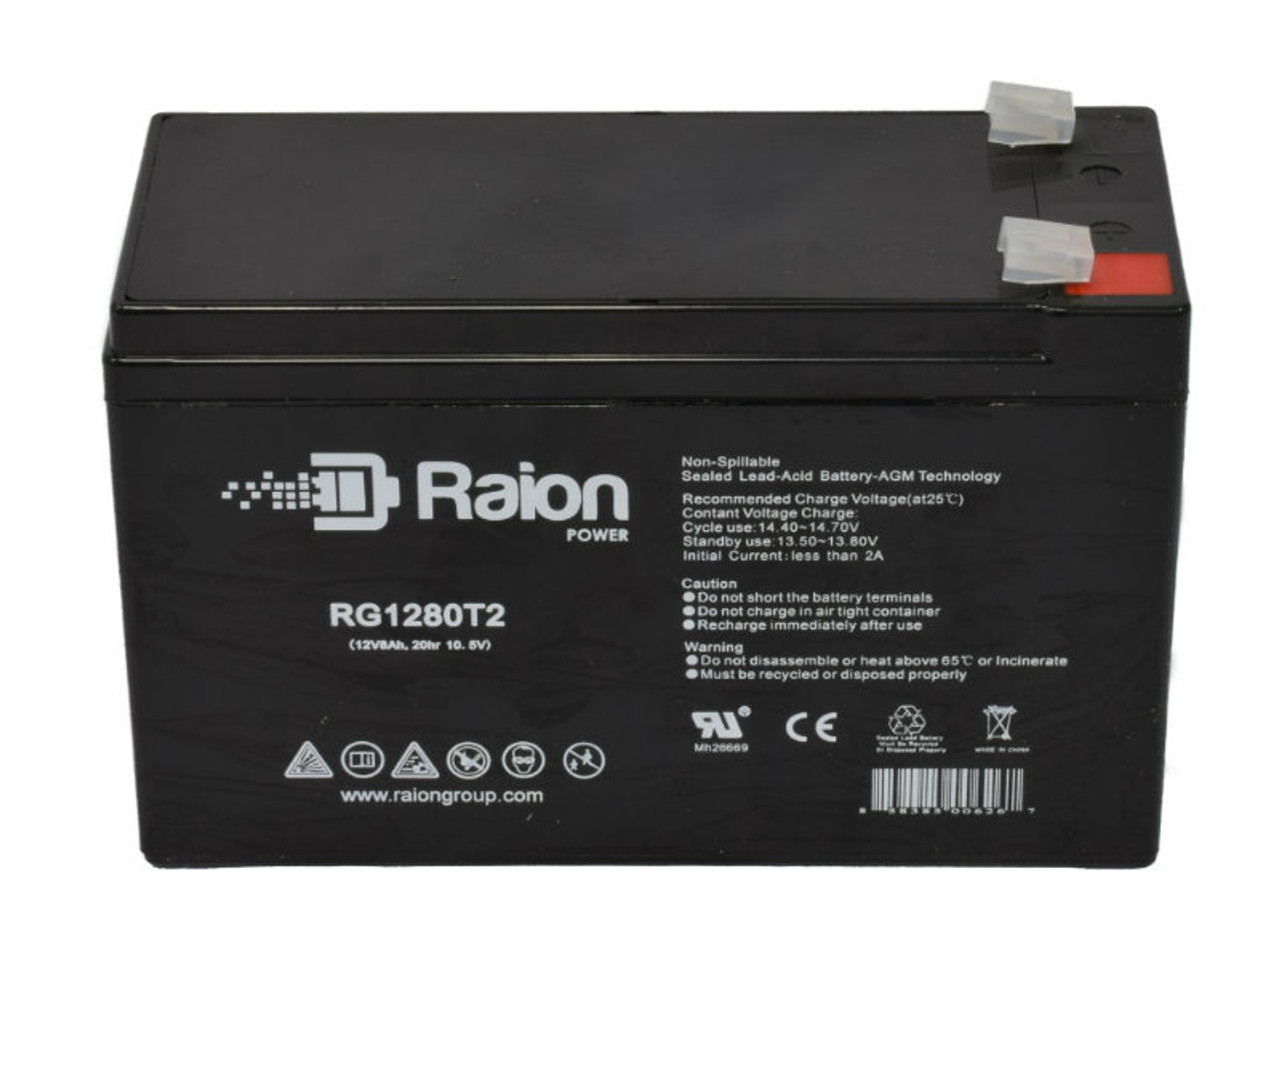 Raion Power RG1280T1 Replacement SLA Battery for Raion Power RG1280T1